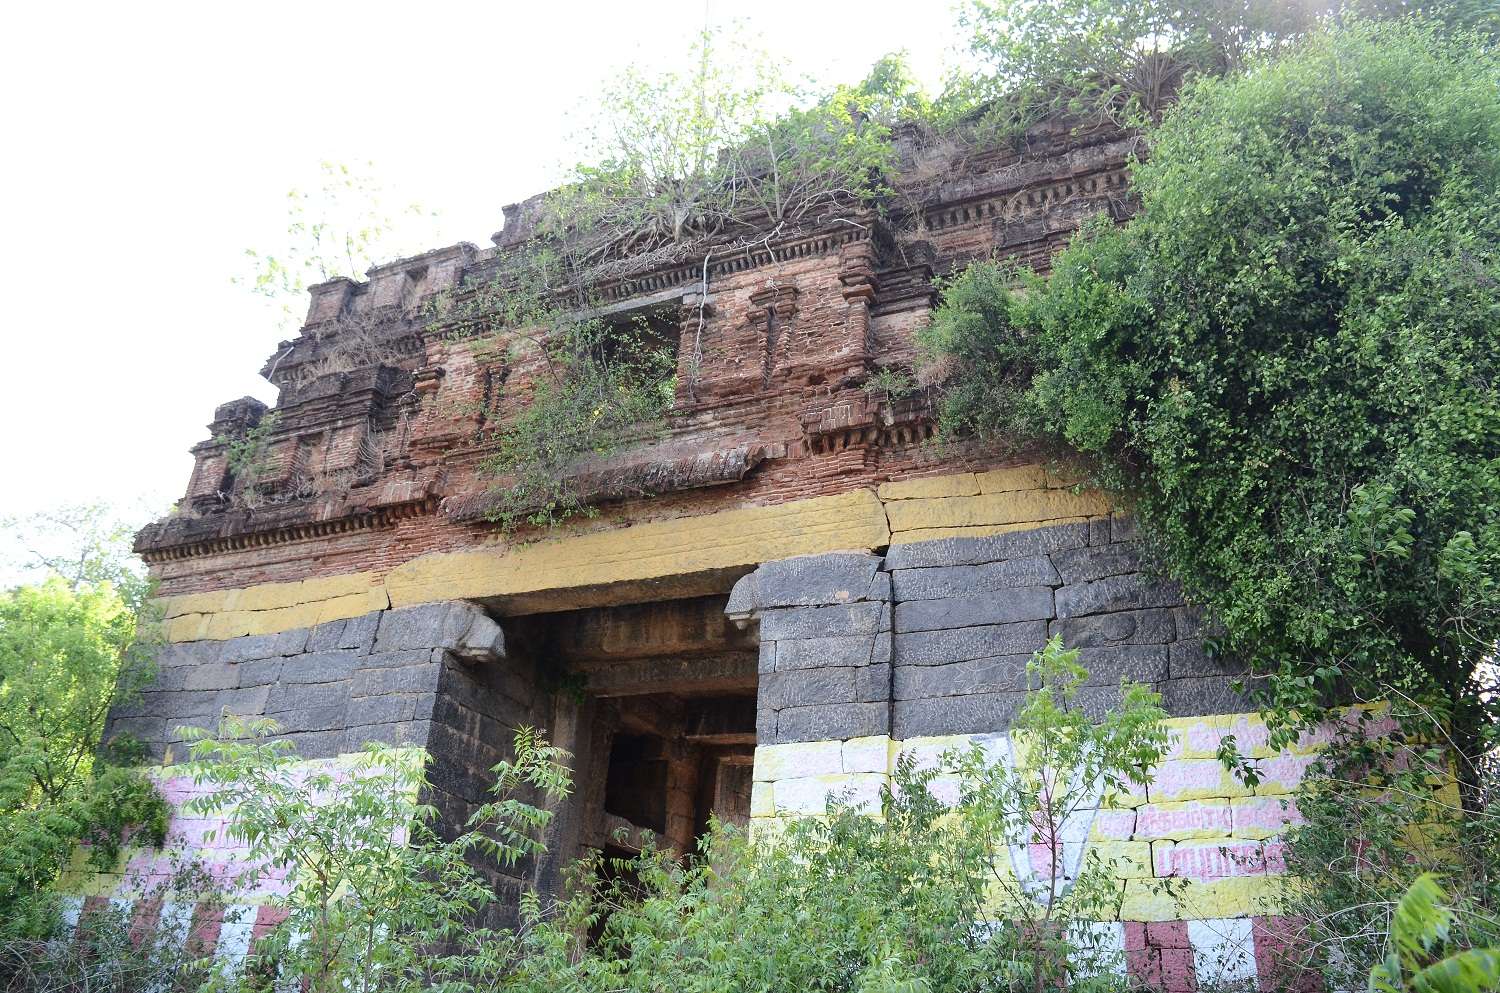 Tamil Nadu,Chennai,Temple,Old,year,